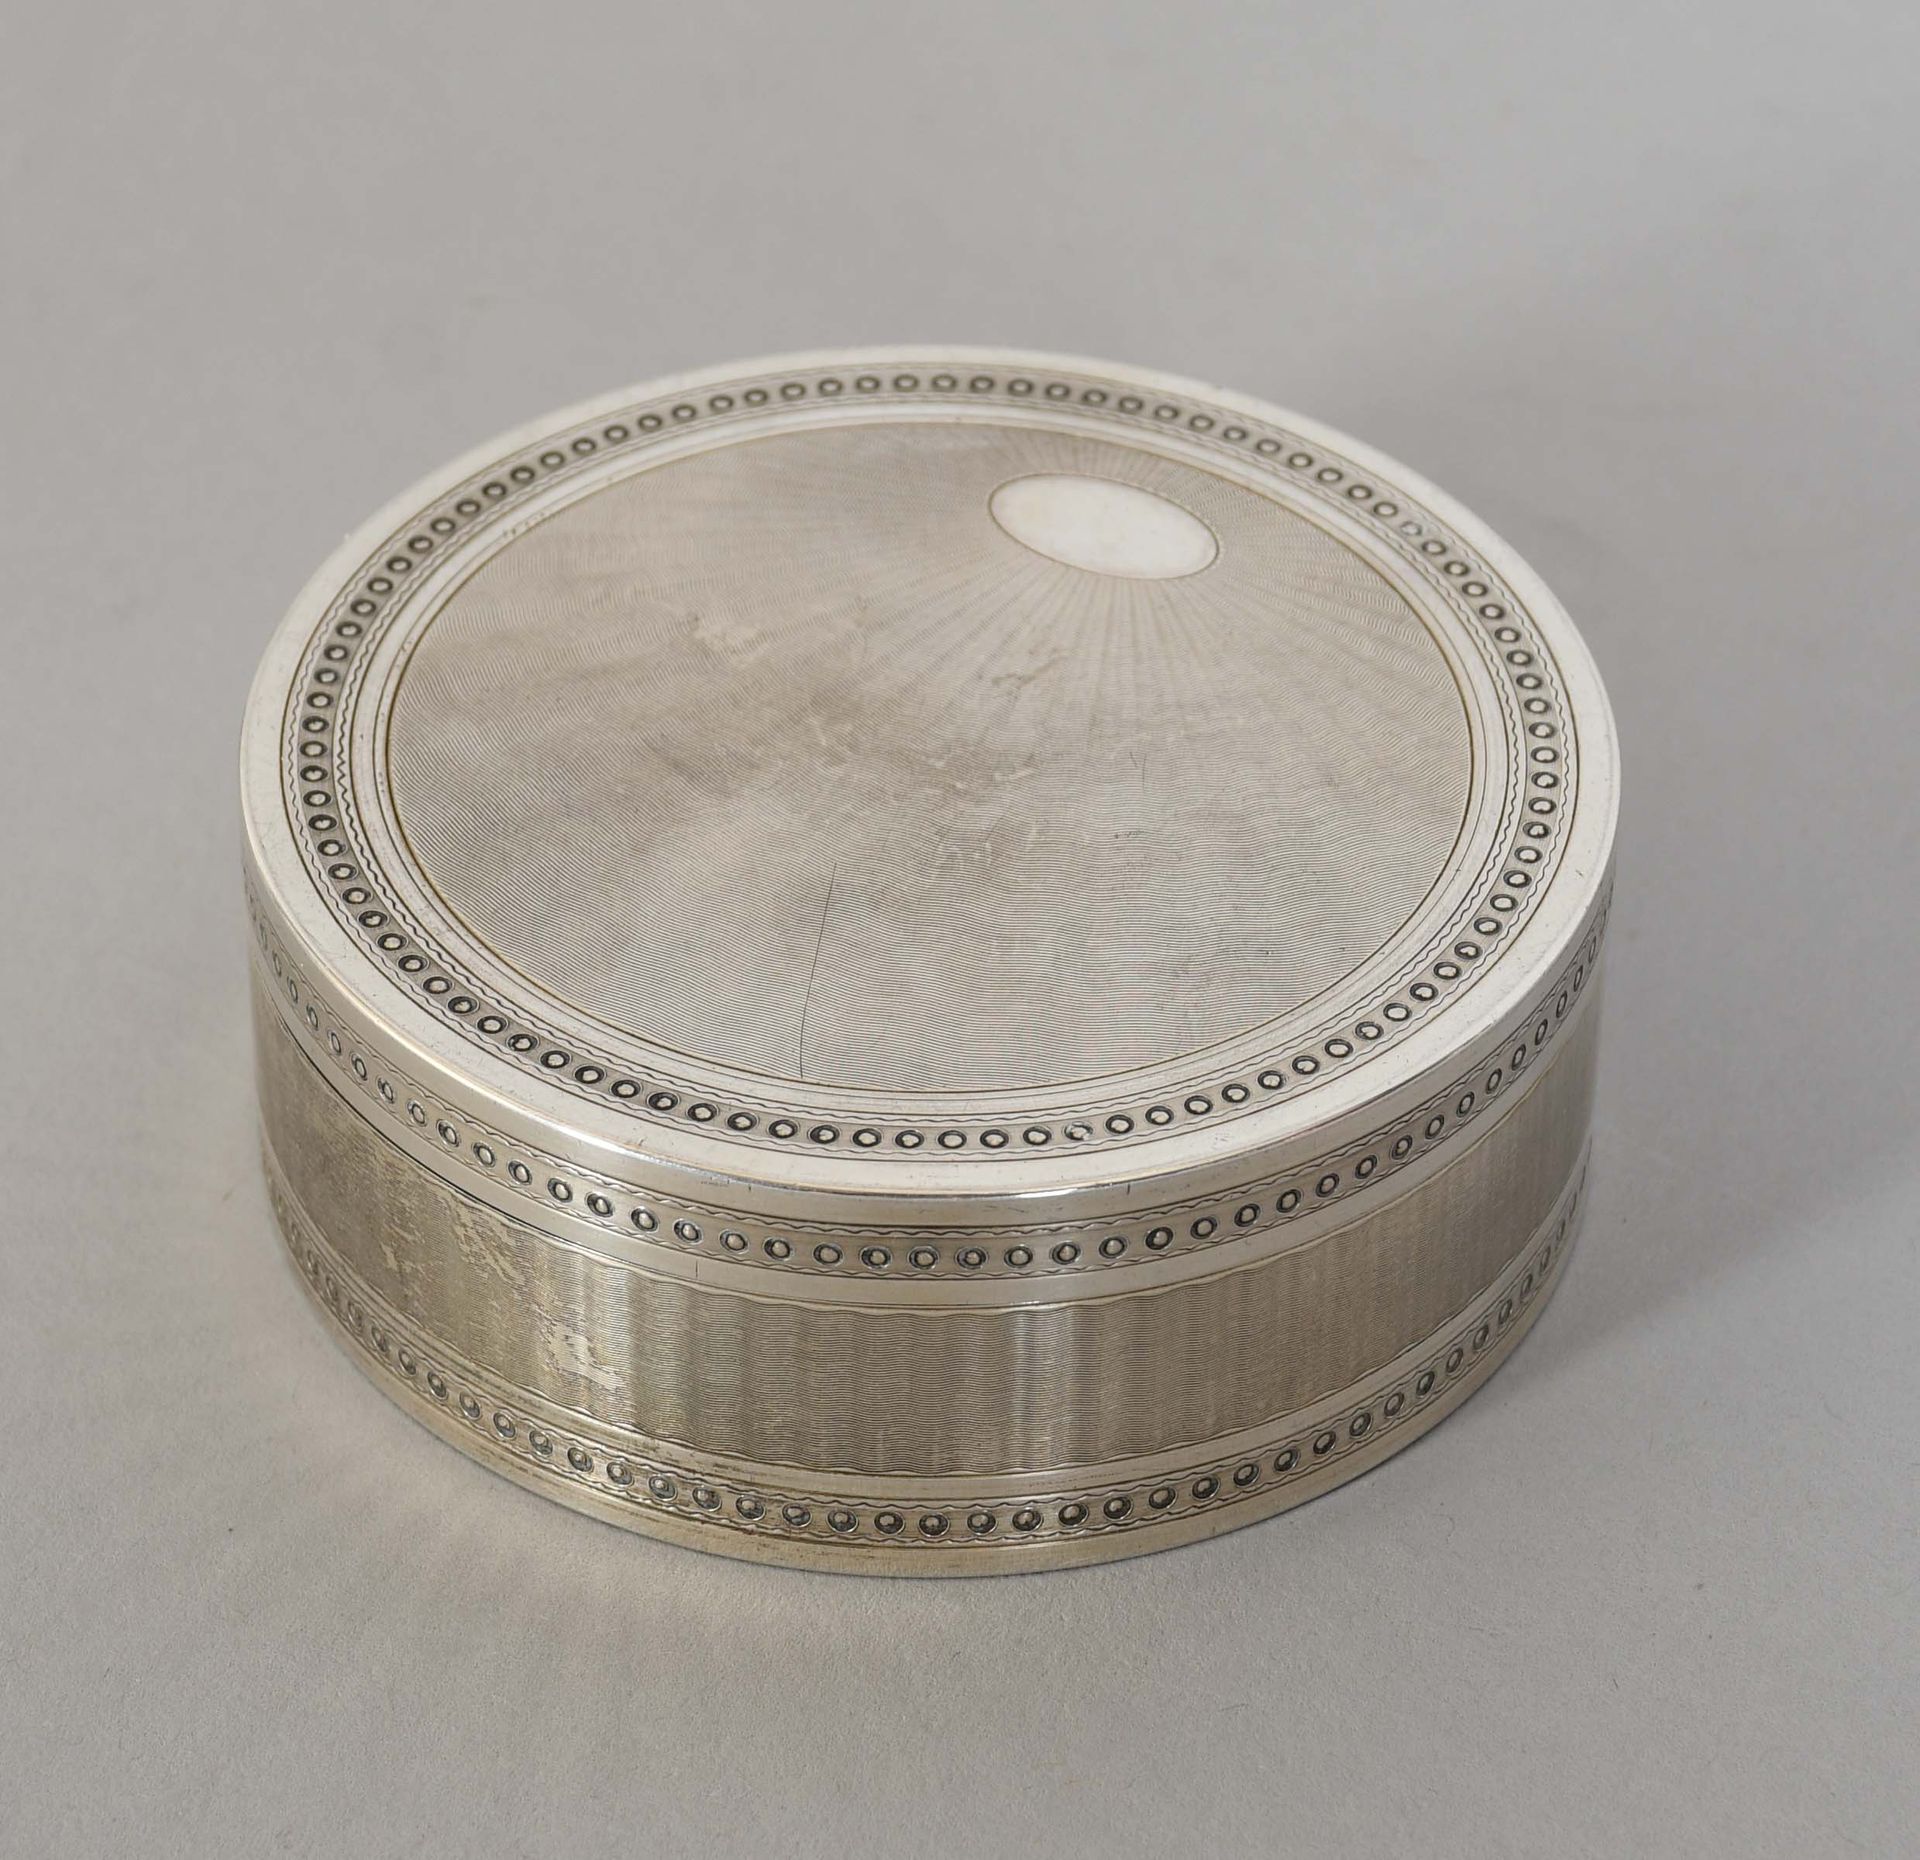 Null Caja redonda en plata batida, interior en vermeil - marca Minerva

Diámetro&hellip;